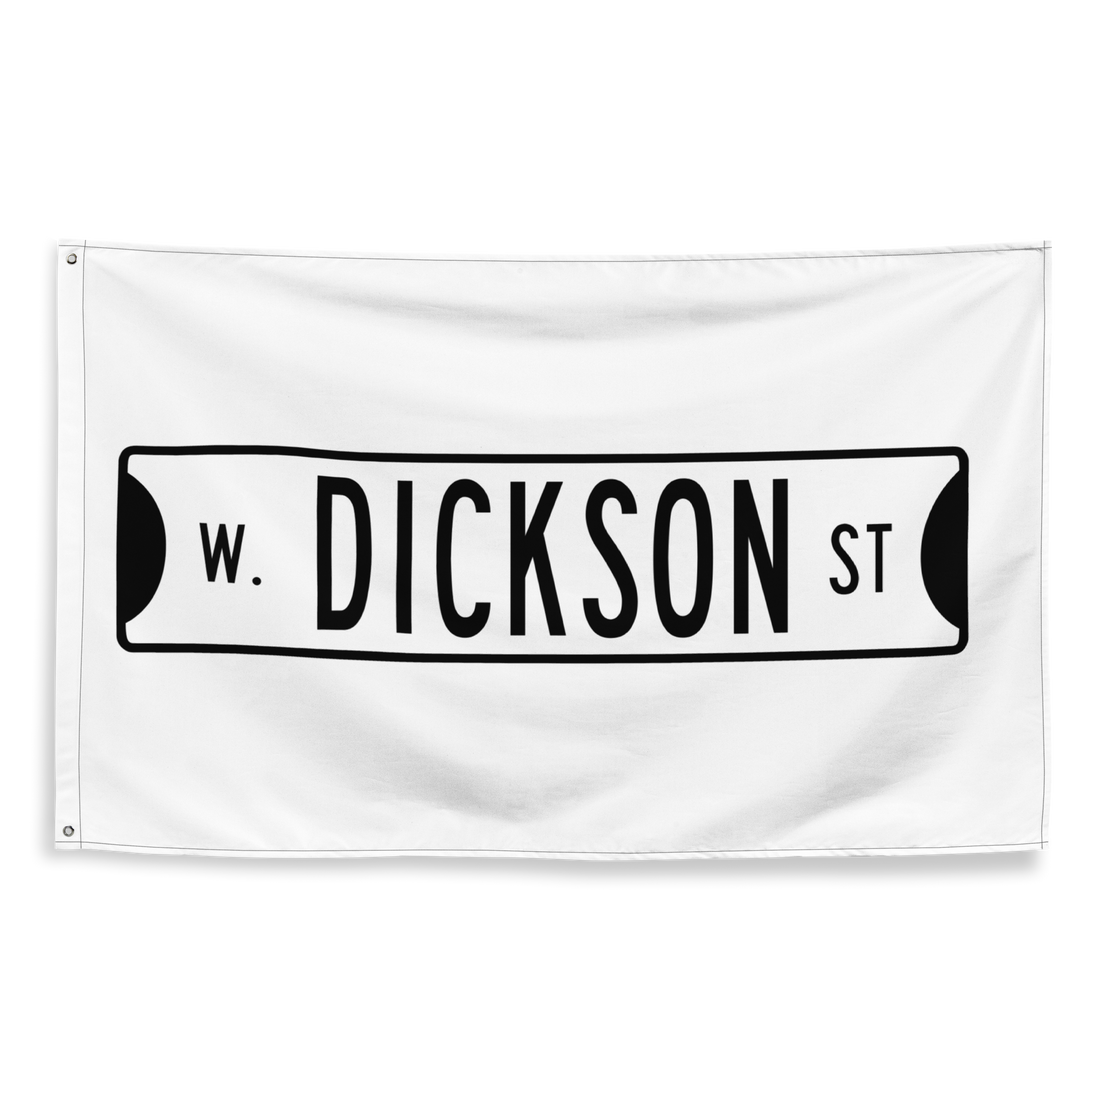 Retro Dickson Street Sign Flag